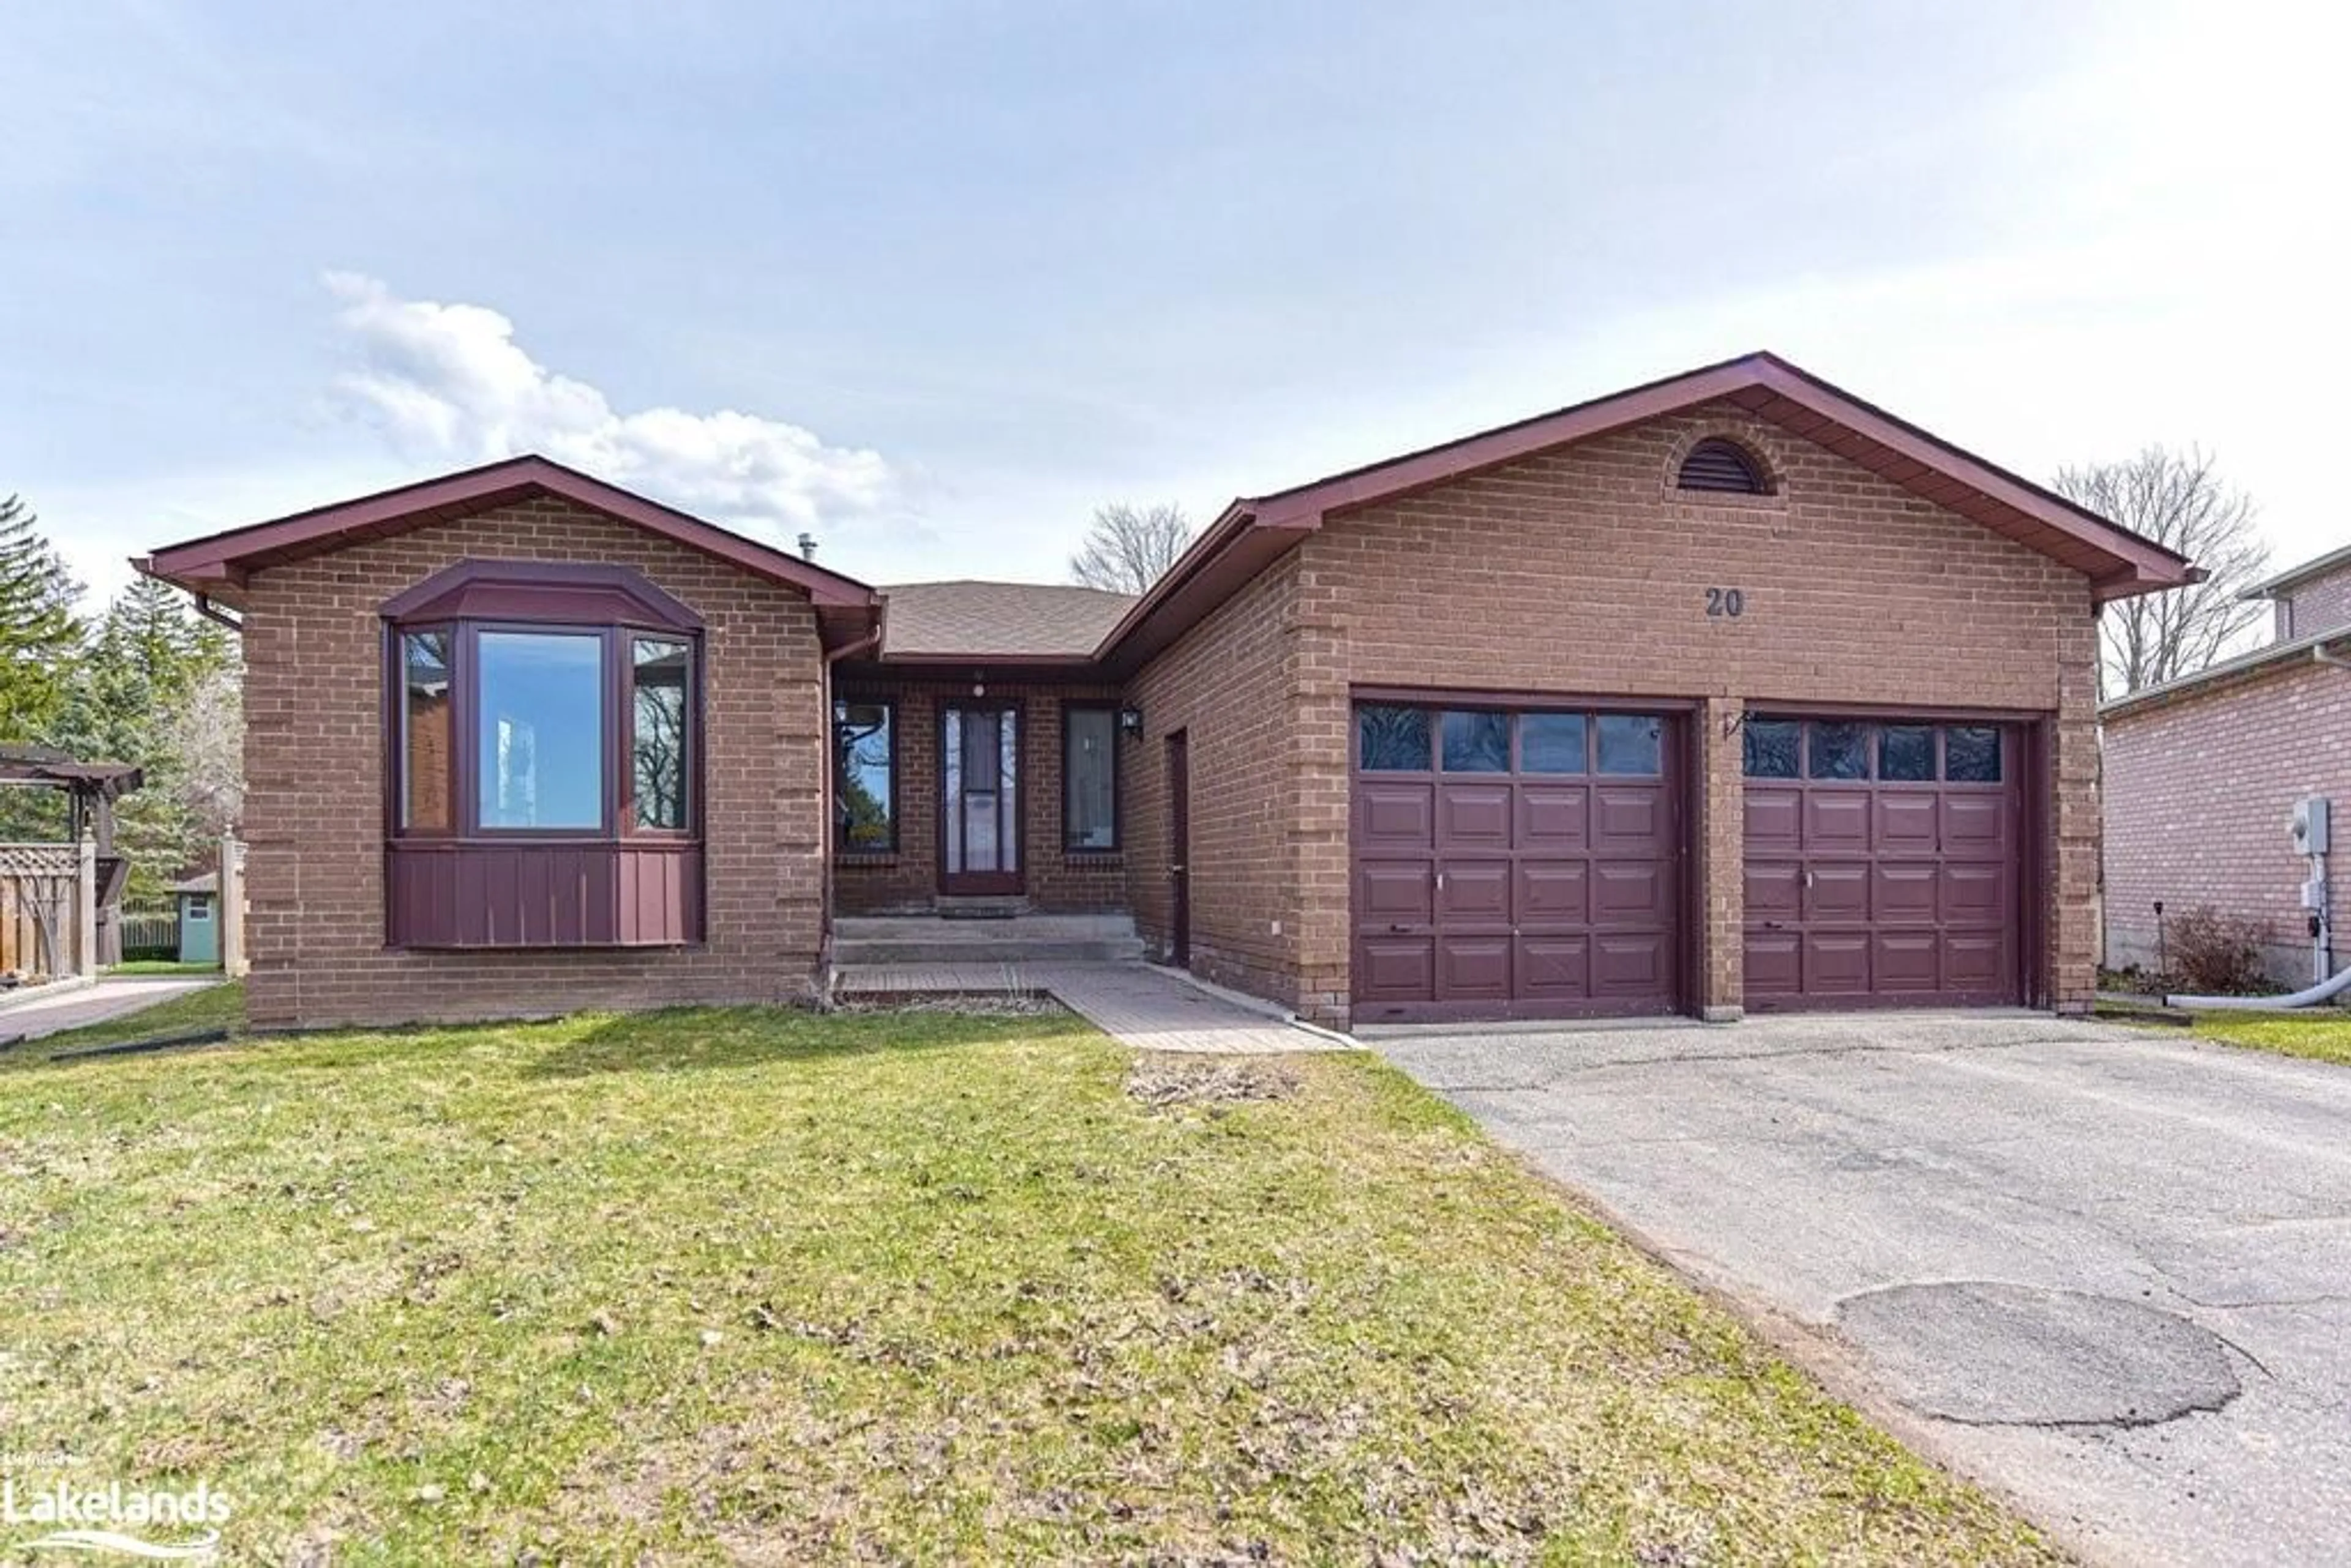 Home with brick exterior material for 20 Lindsay Cres, Orillia Ontario L3V 7G3